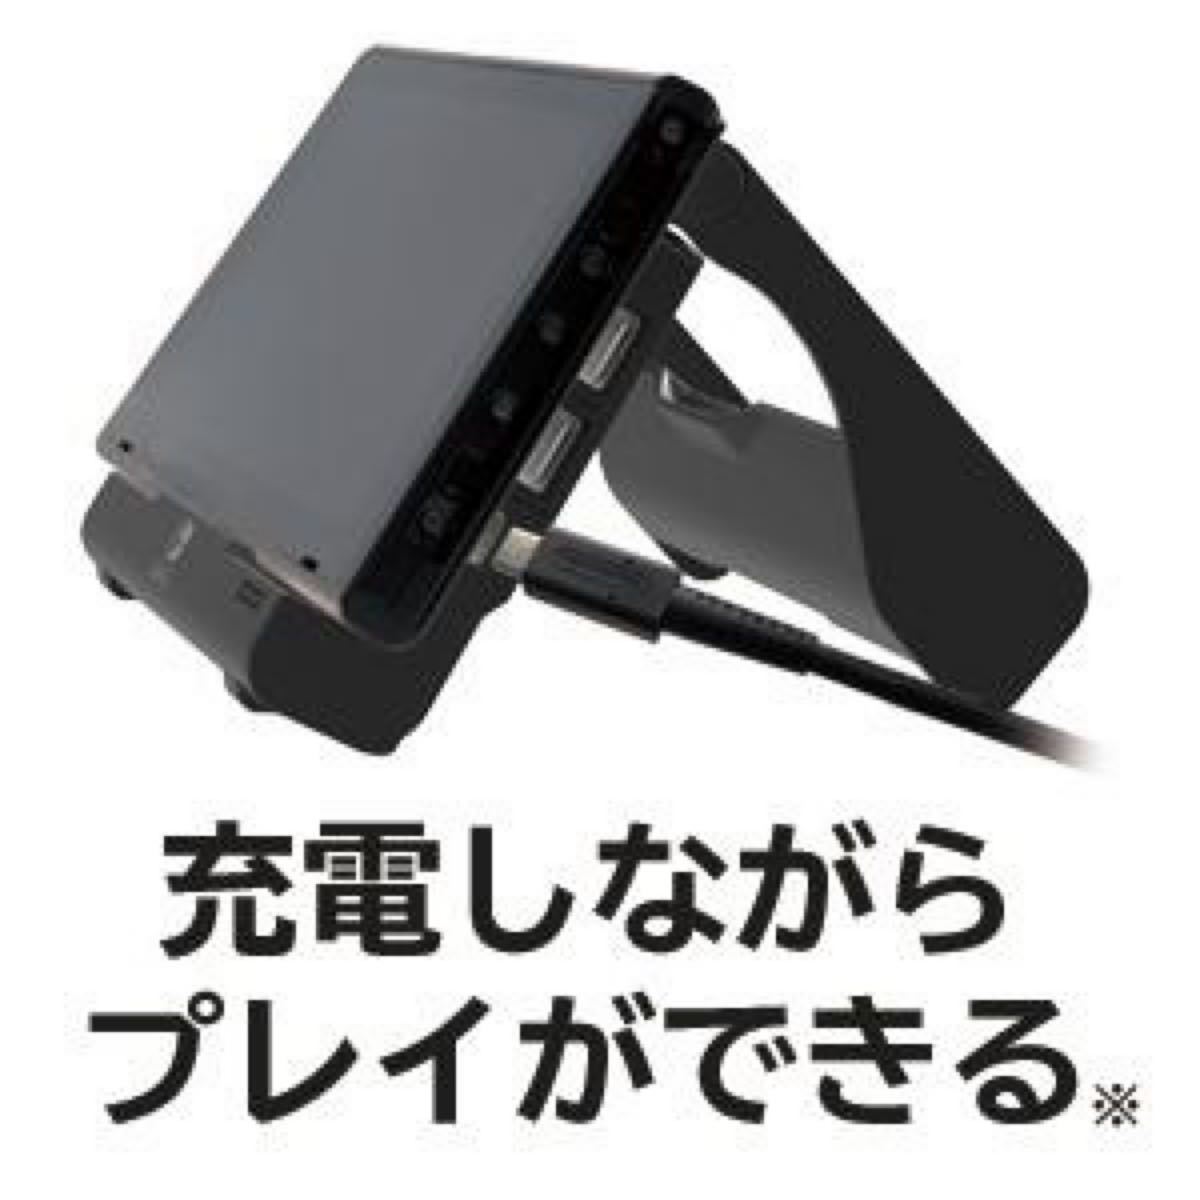 【Nintendo Switch対応】ポータブルUSBハブスタンド for Nintendo Switch (テーブルモード専用)